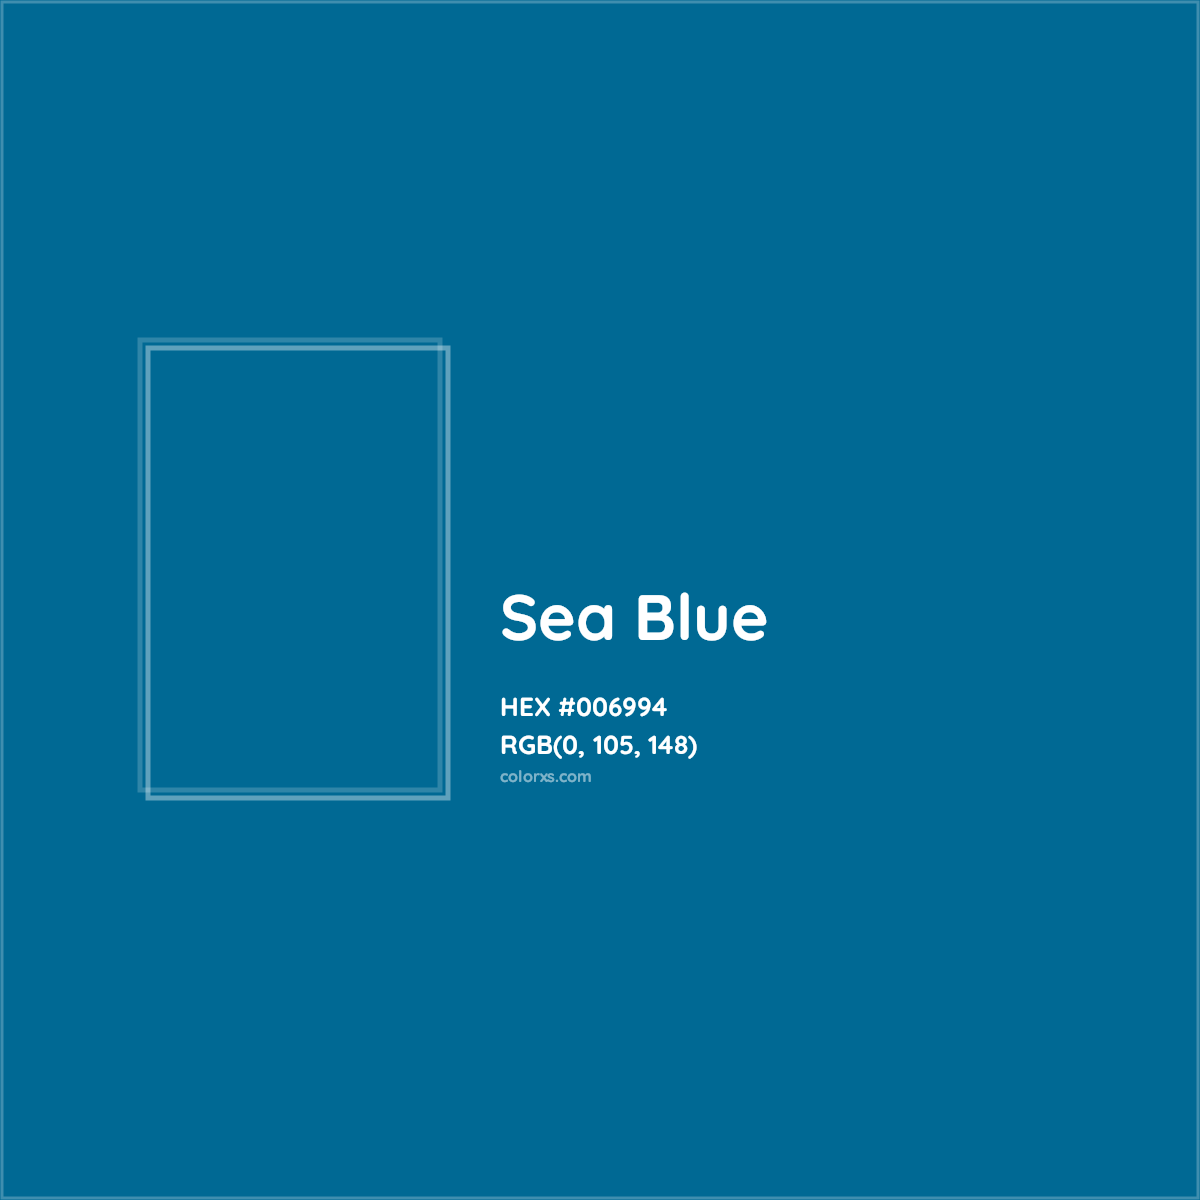 HEX #006994 Sea Blue Color - Color Code